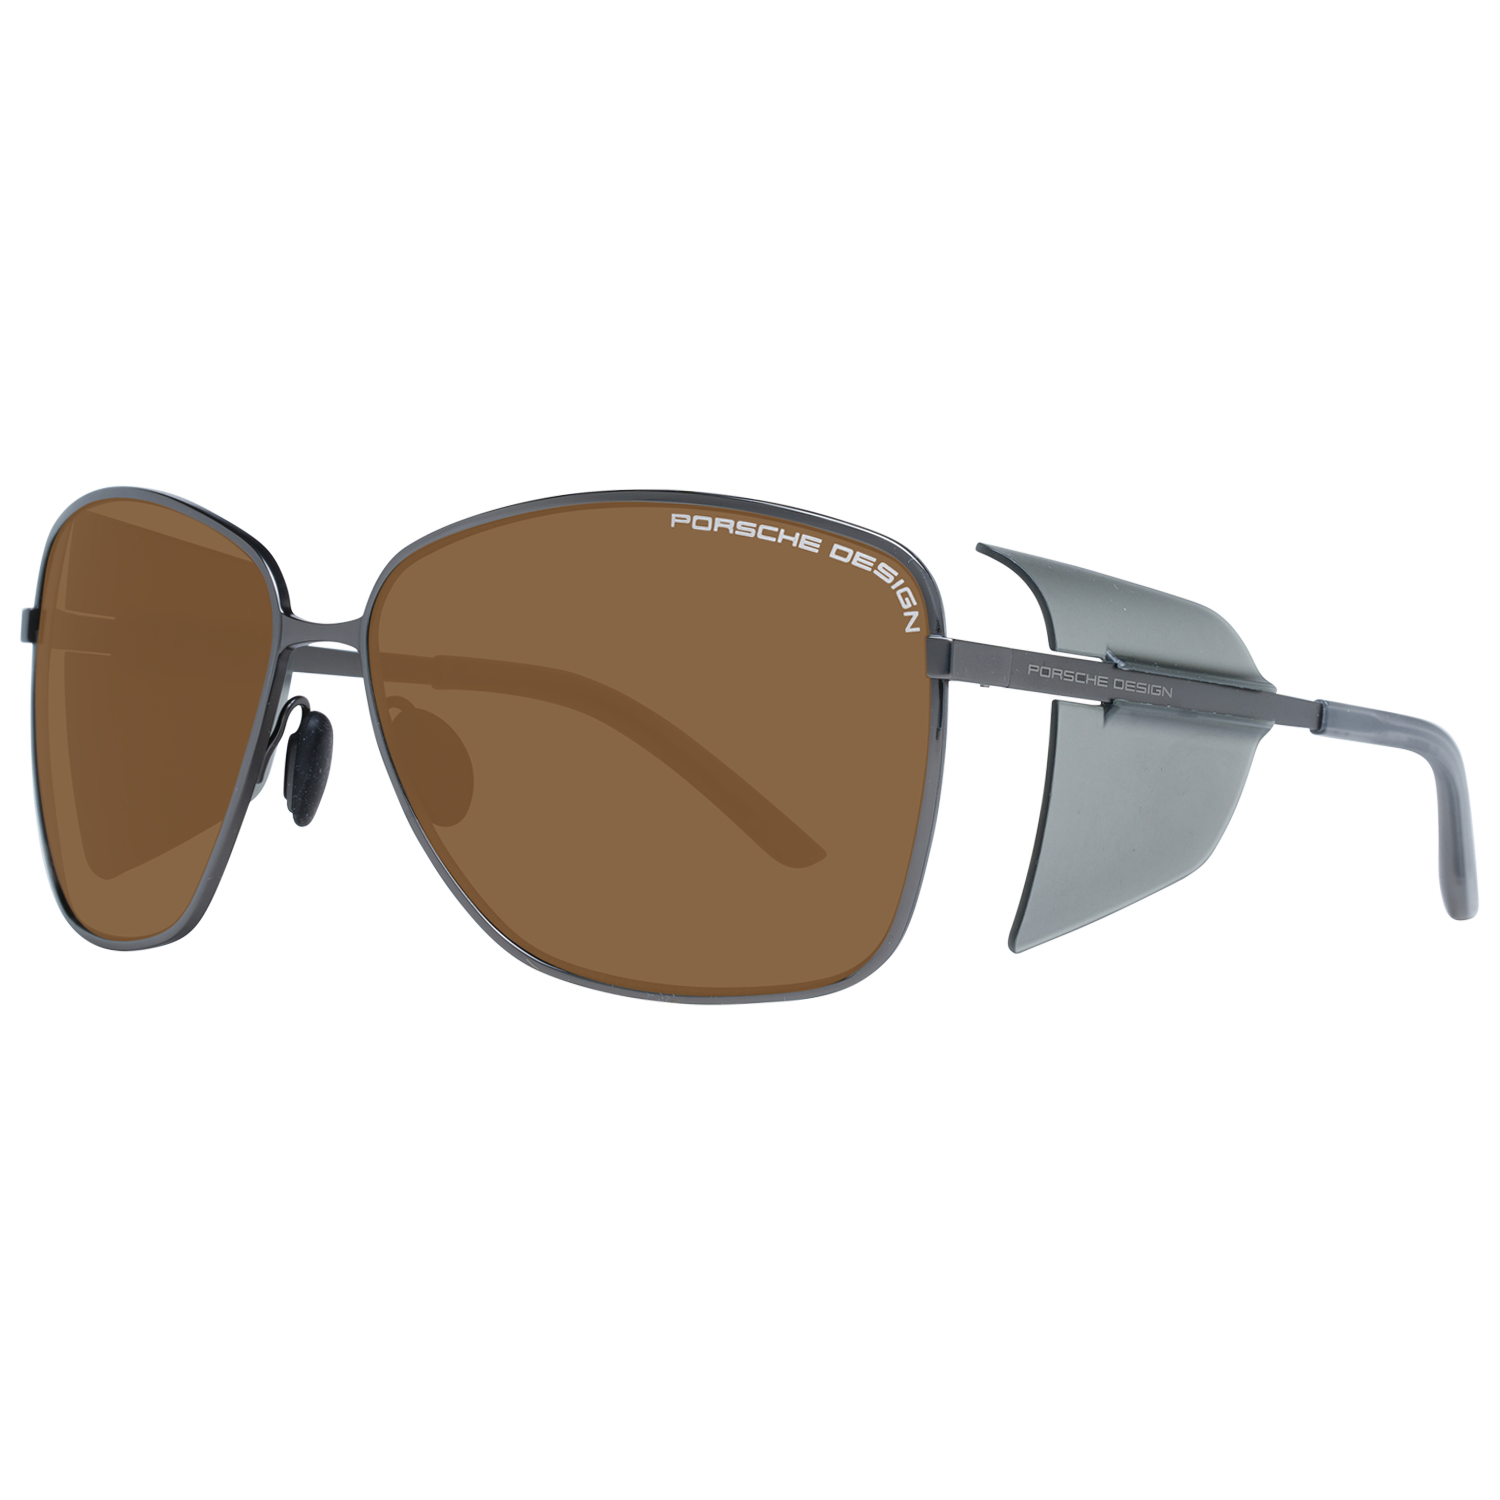 Porsche Design Sunglasses Porsche Design Sunglasses P8599 A 63 Eyeglasses Eyewear UK USA Australia 